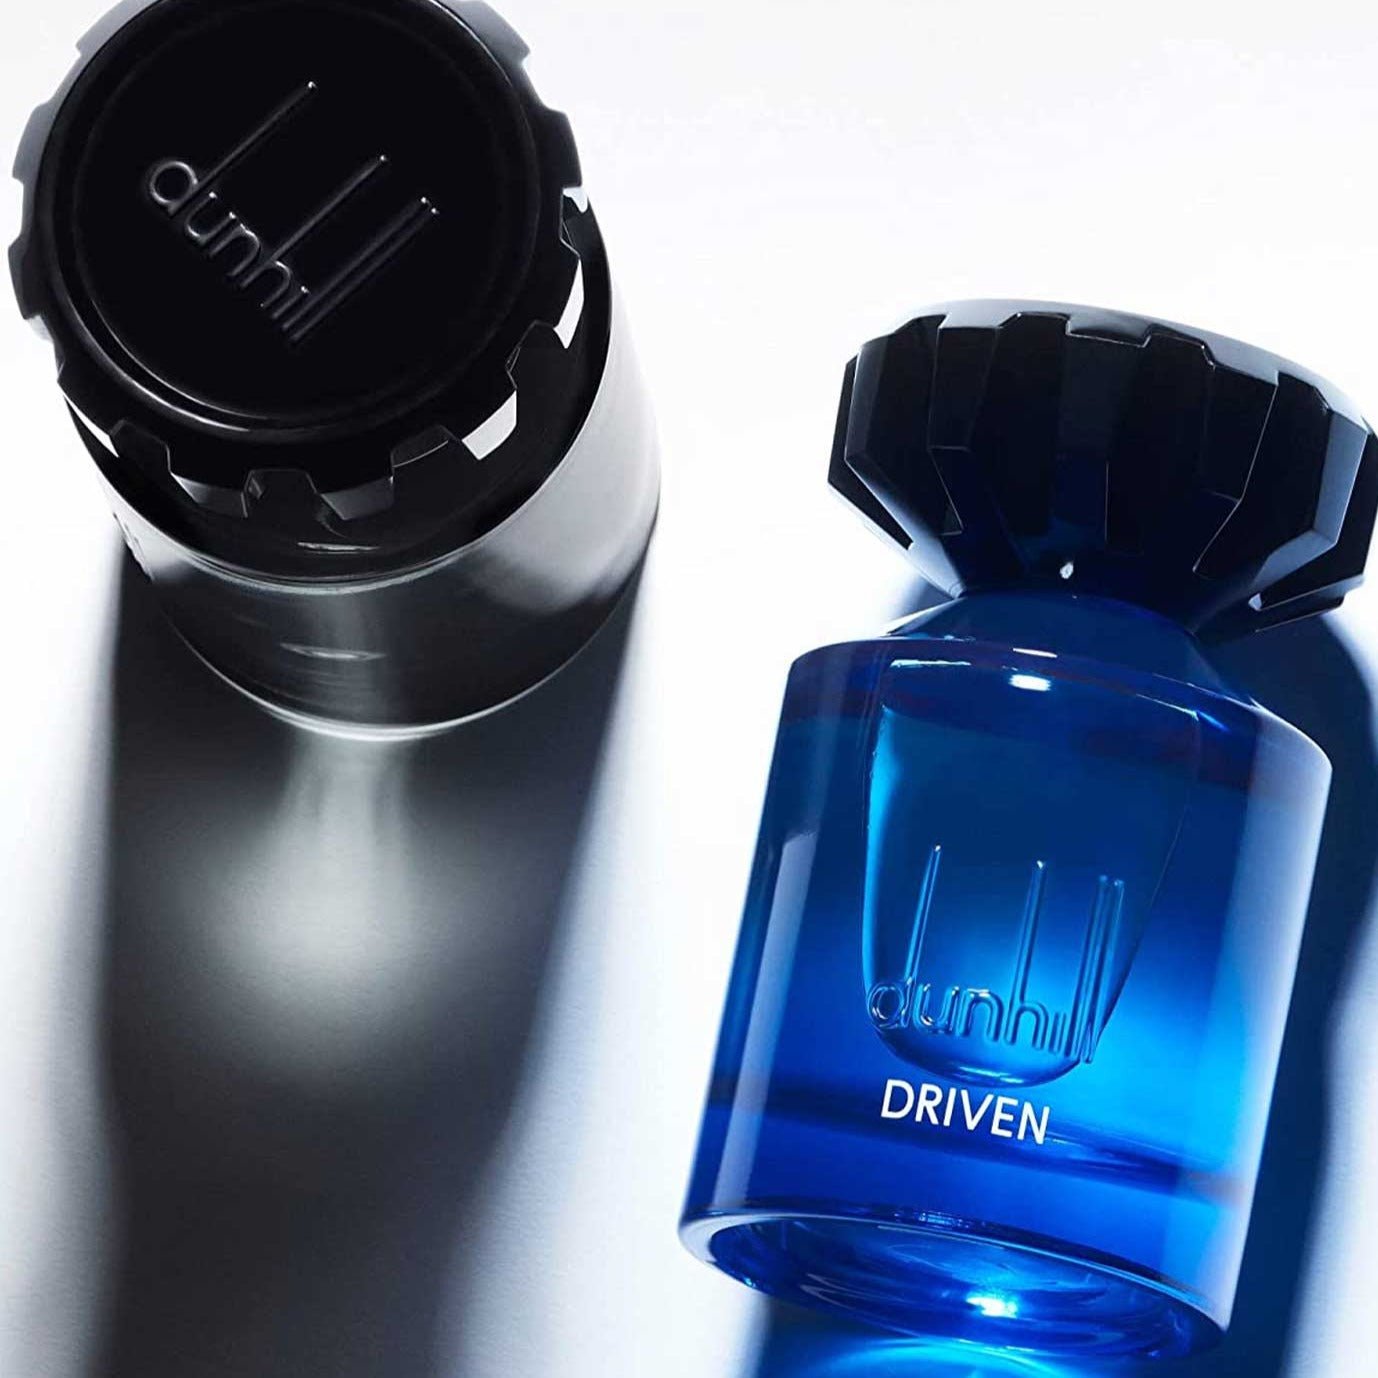 Dunhill Driven EDT Shower Gel Set | My Perfume Shop Australia